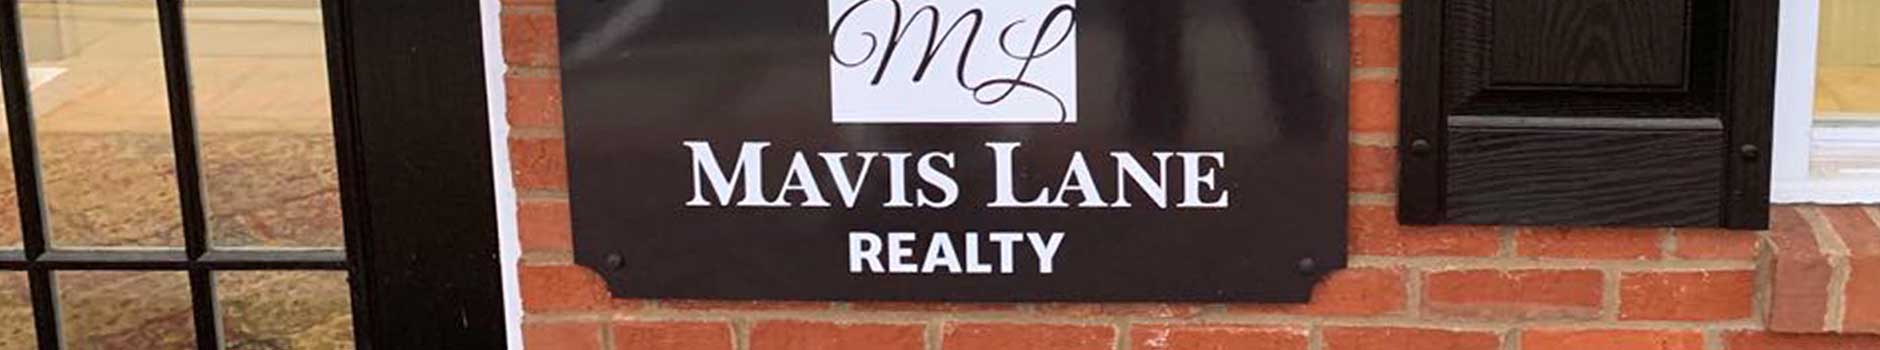 Mavis Lane Realty, Brick and Mortar Office